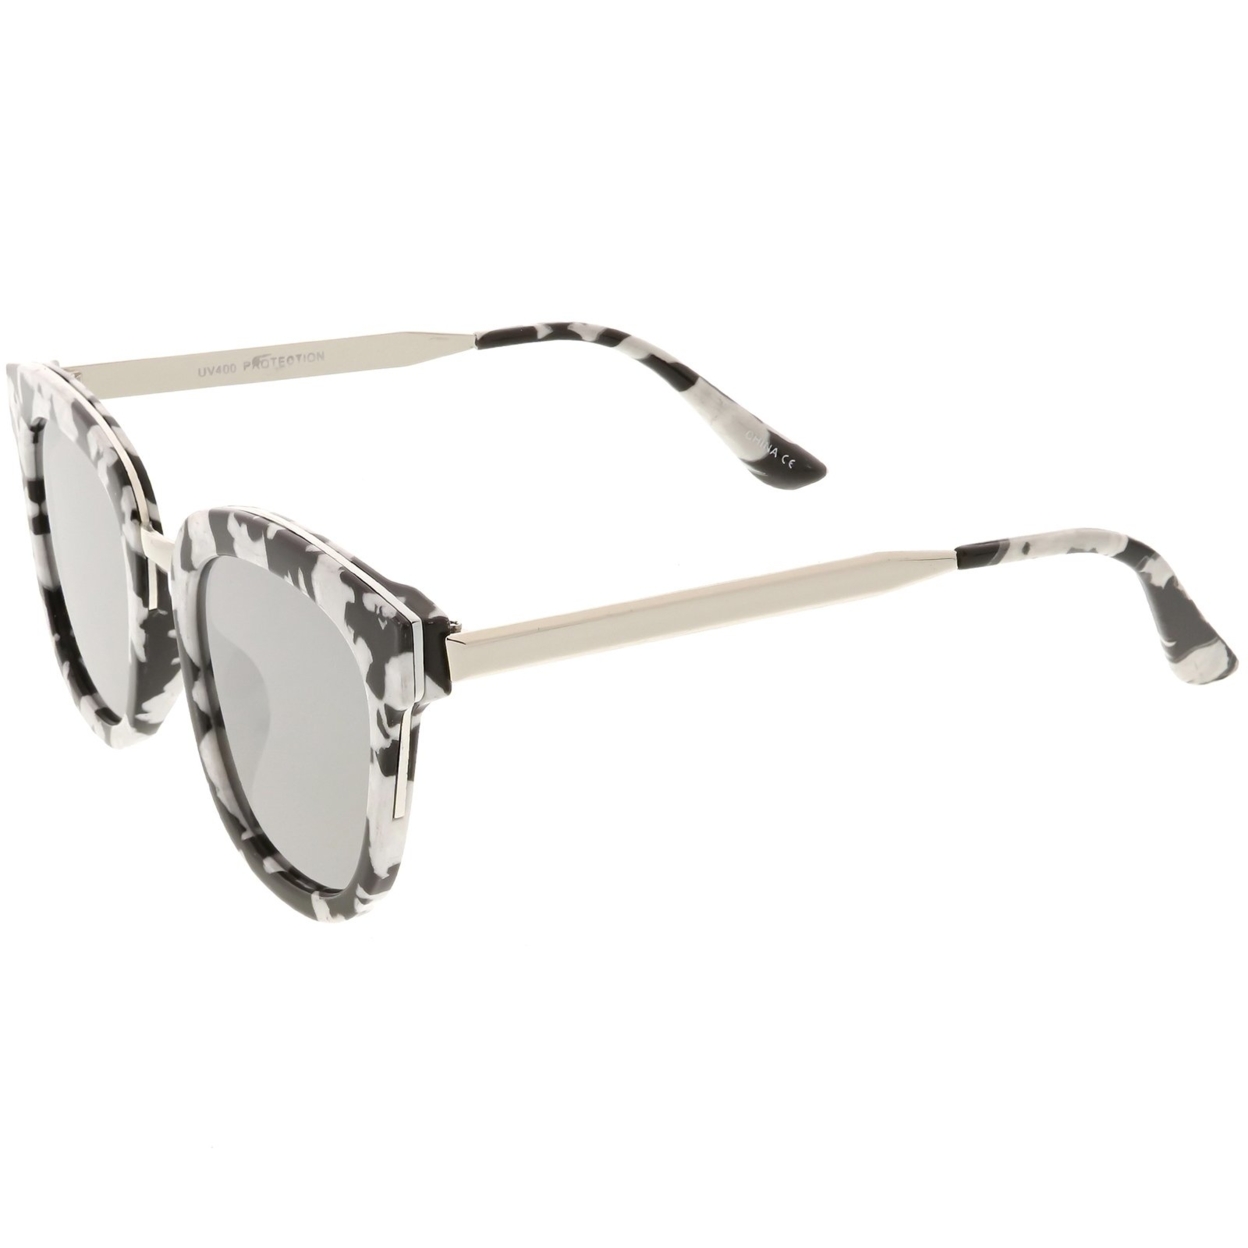 Marble Printed Horn Rimmed Sunglasses Metal Nose Bridge Colored Mirror Square Flat Lens 49mm - Black White Black / Blue Mirror